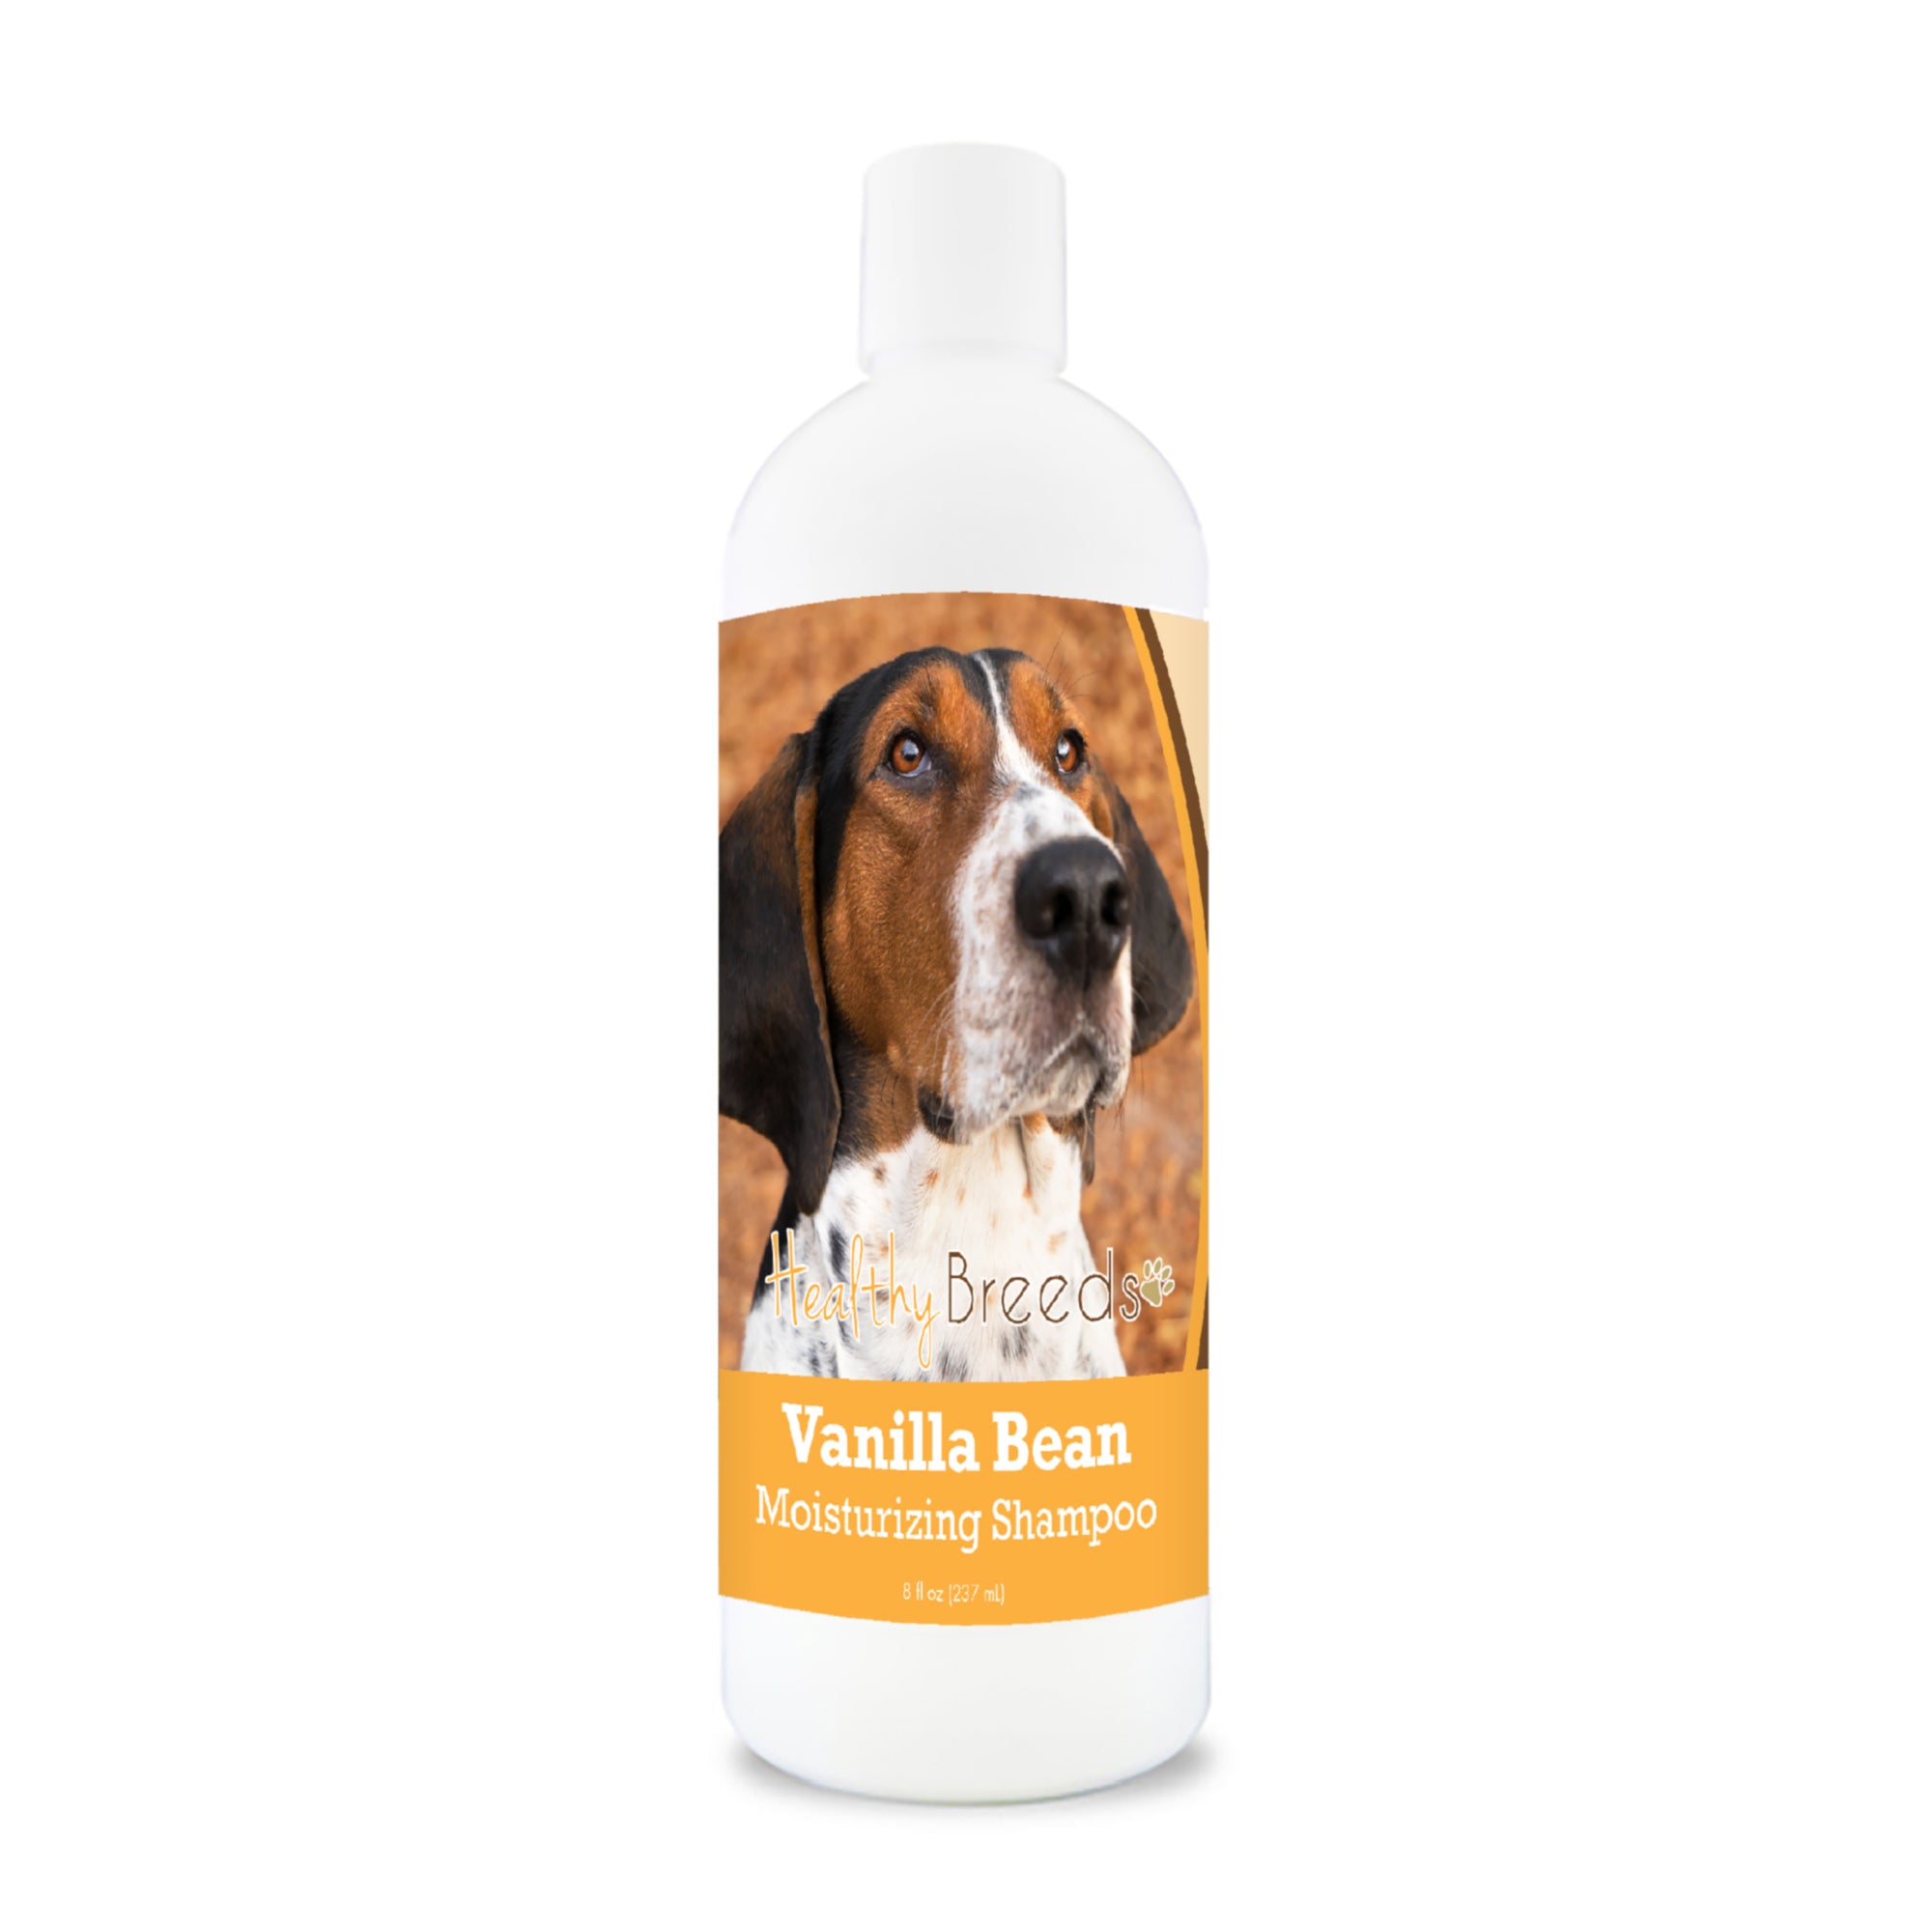 Treeing Walker Coonhound Vanilla Bean Moisturizing Shampoo 8 oz